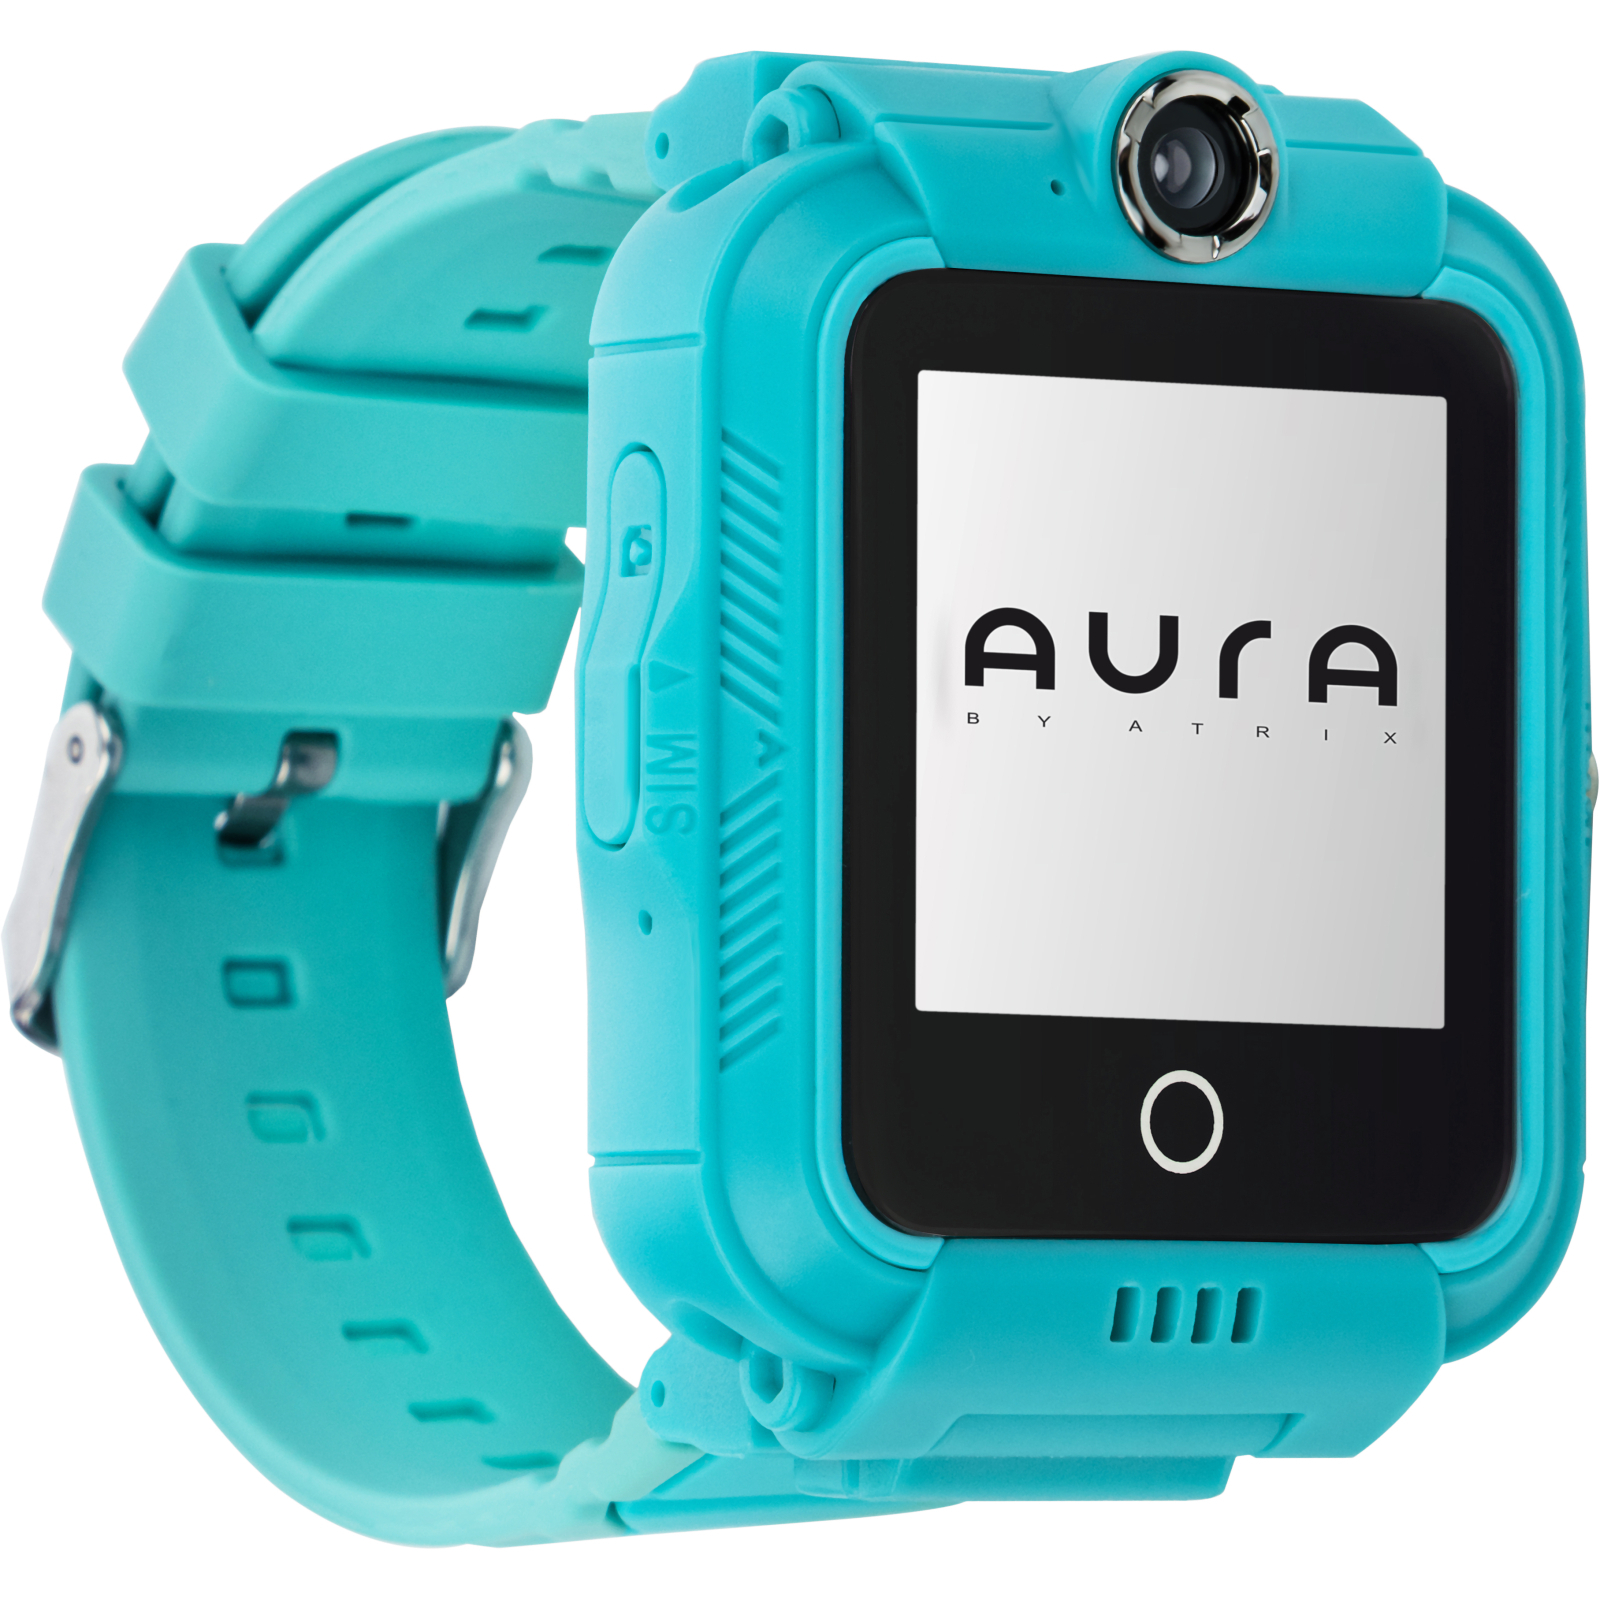 Смарт-часы AURA A4 4G WIFI Pink (KWAA44GWFP) изображение 2